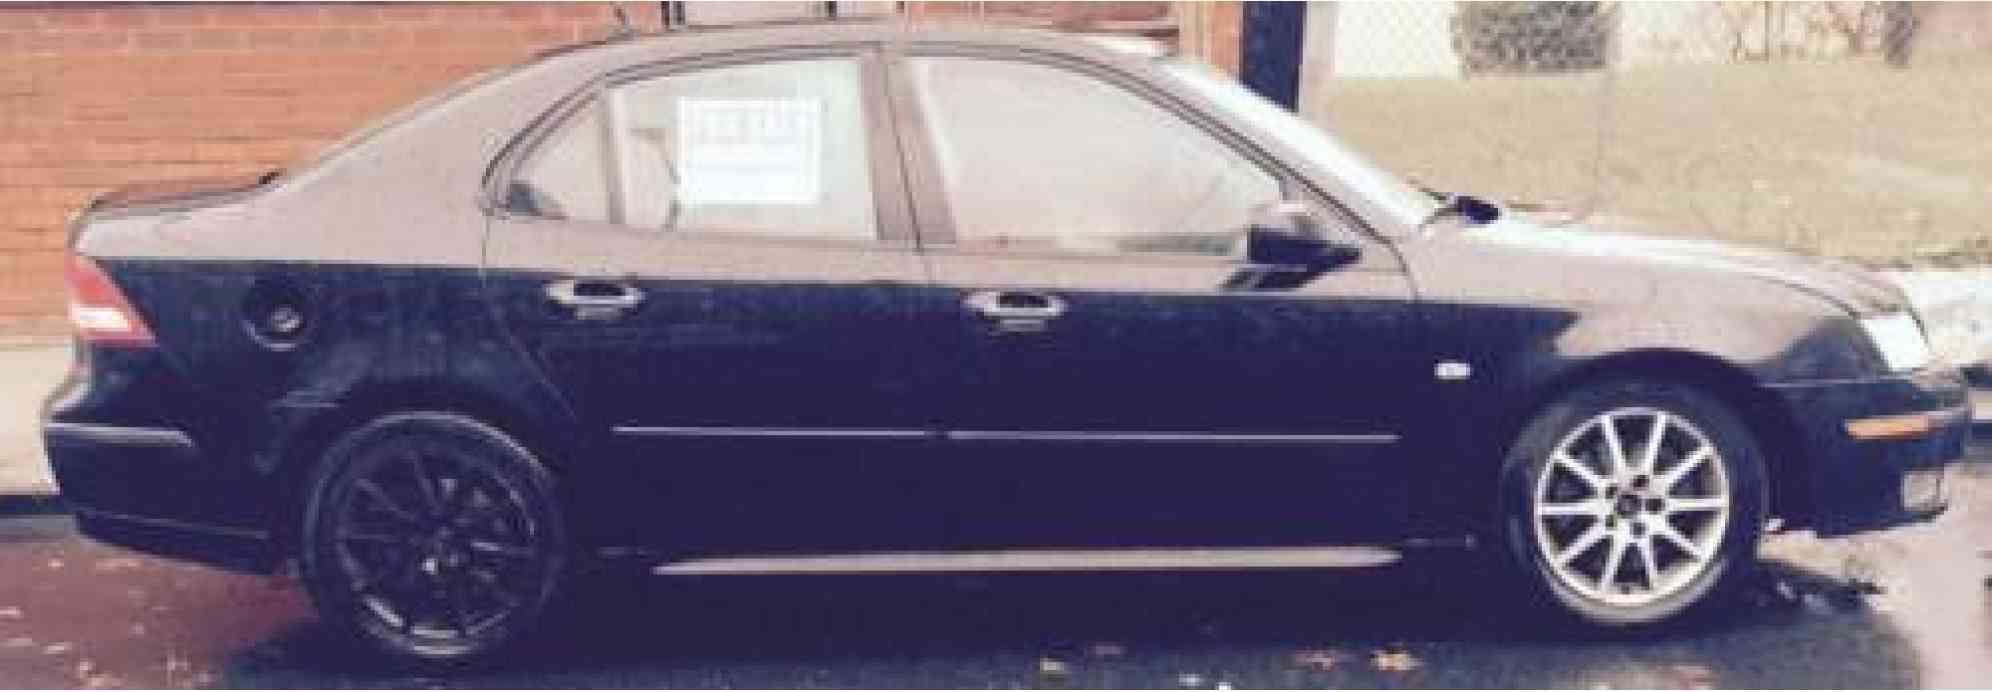 2003 Saab 9-3 Sport Sedan 4-Door